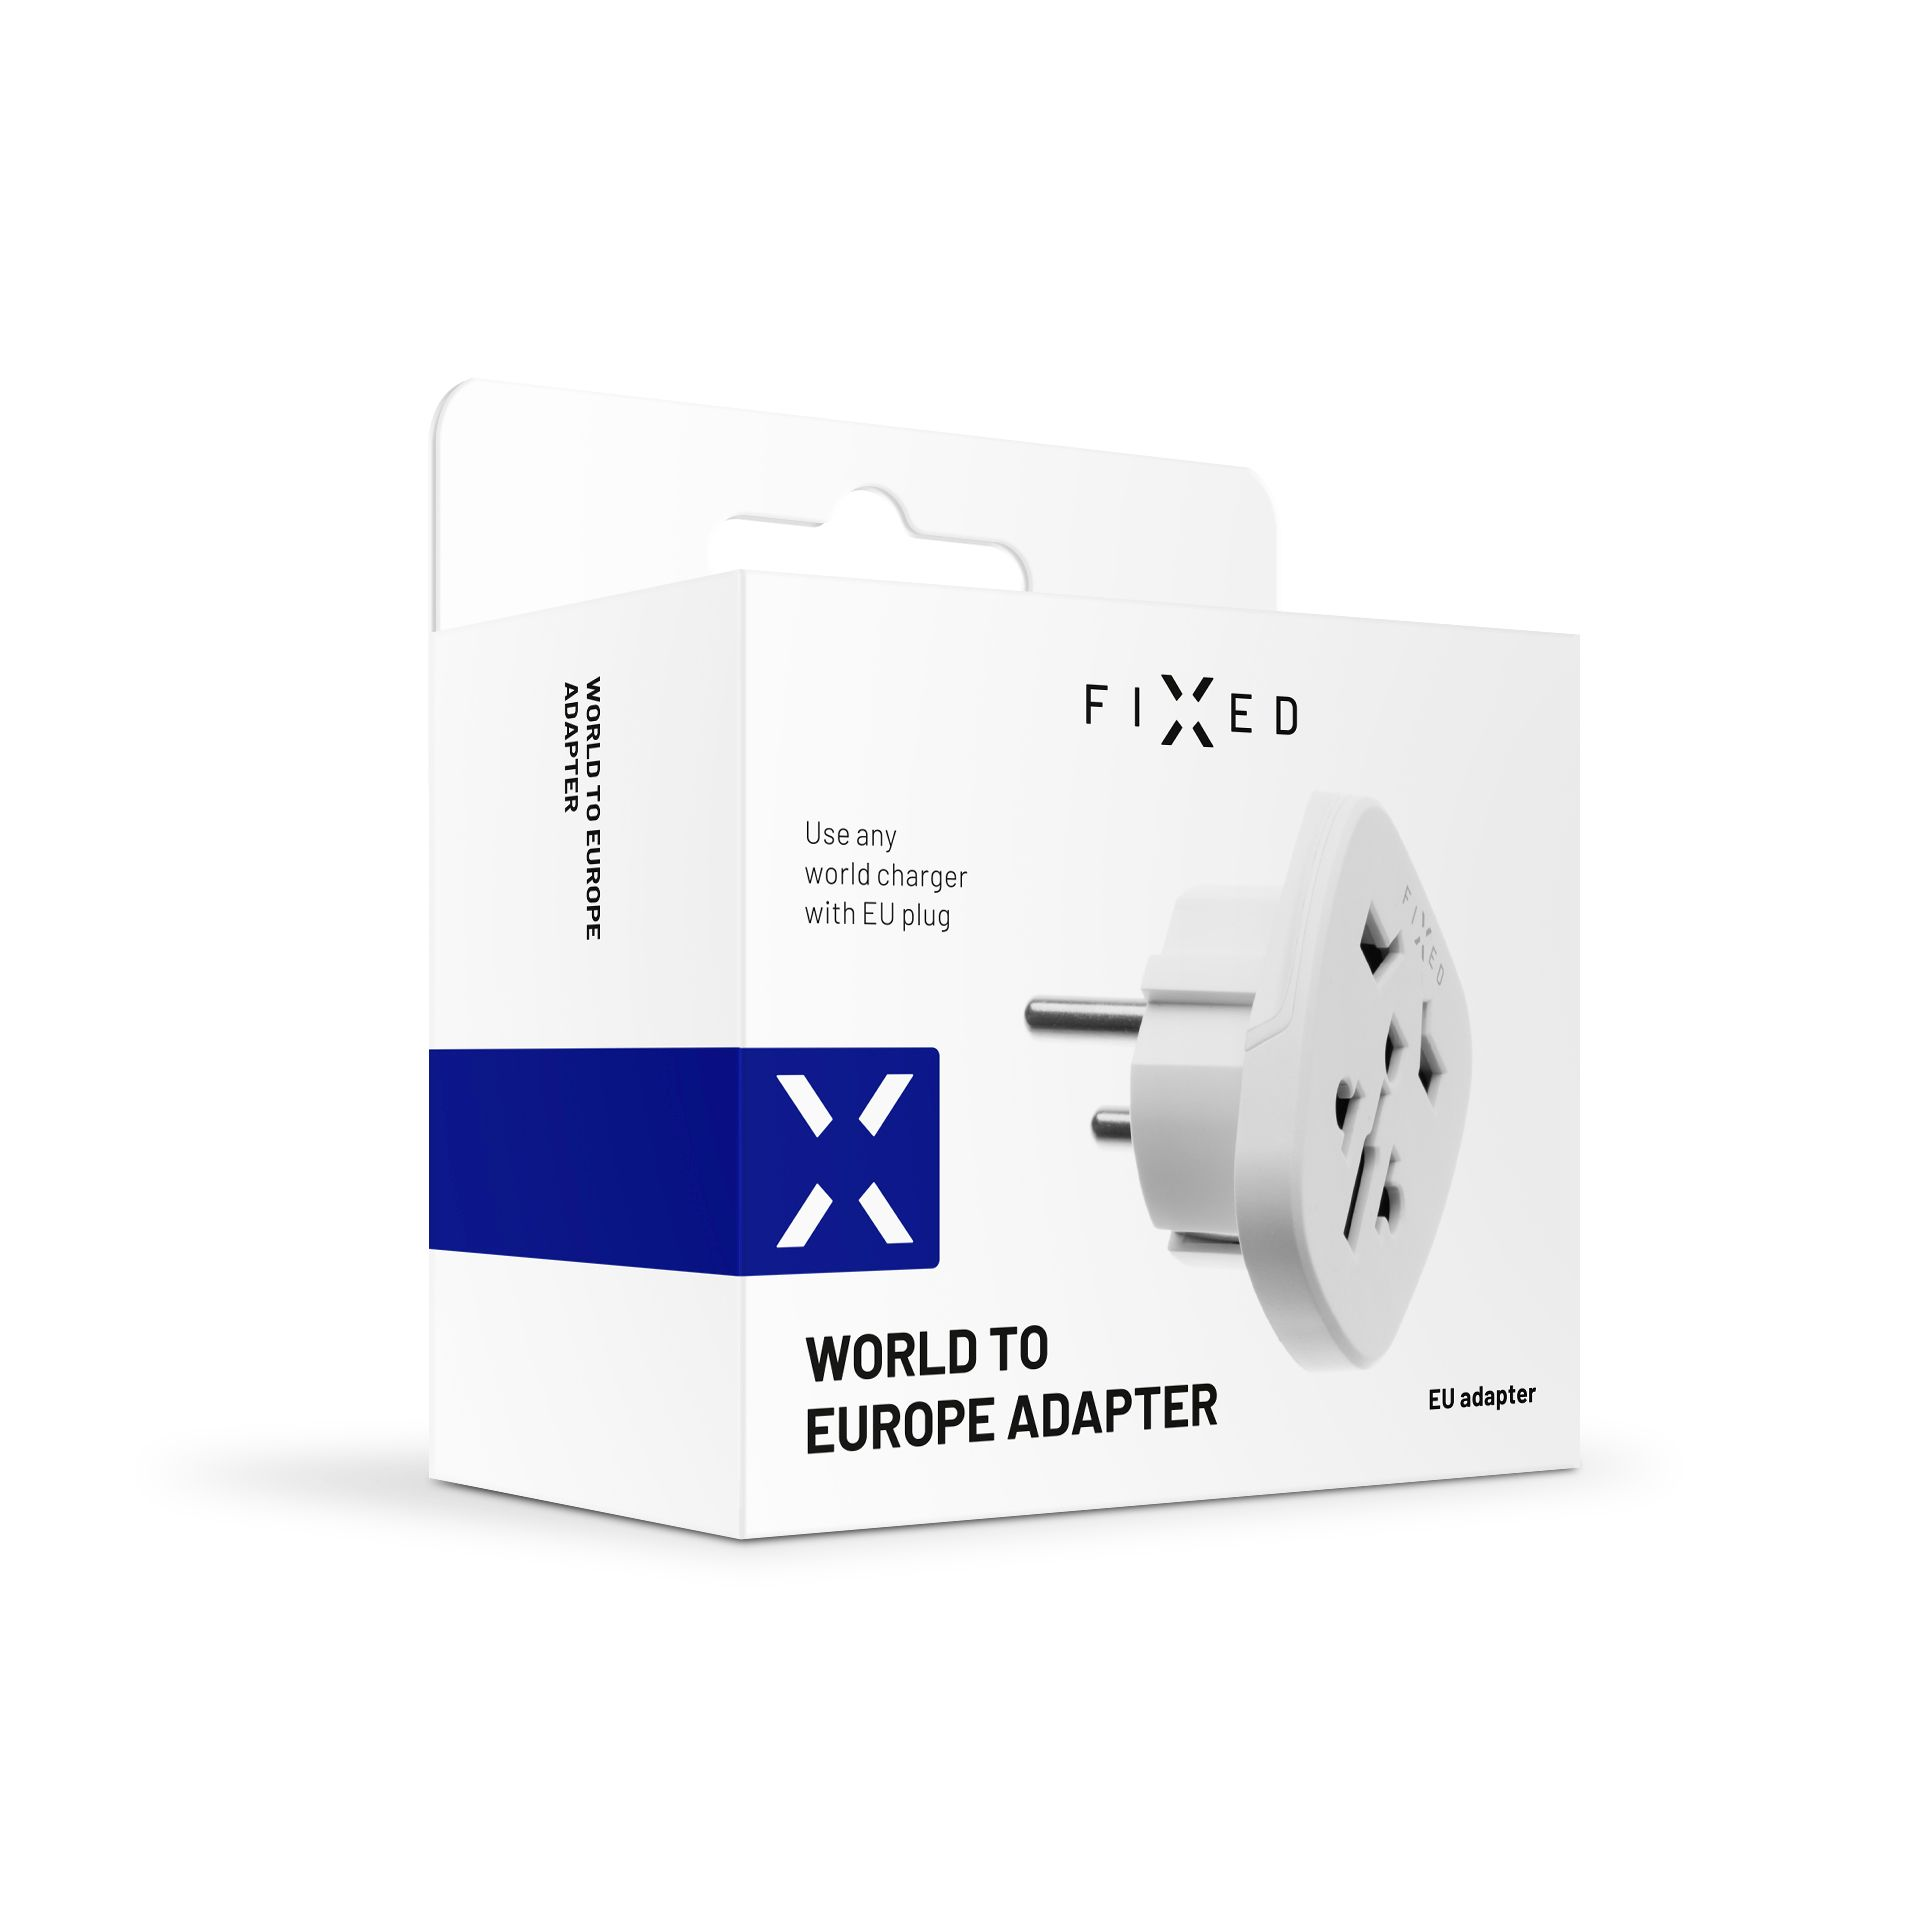 FIXCT-EU Adapter FIXED